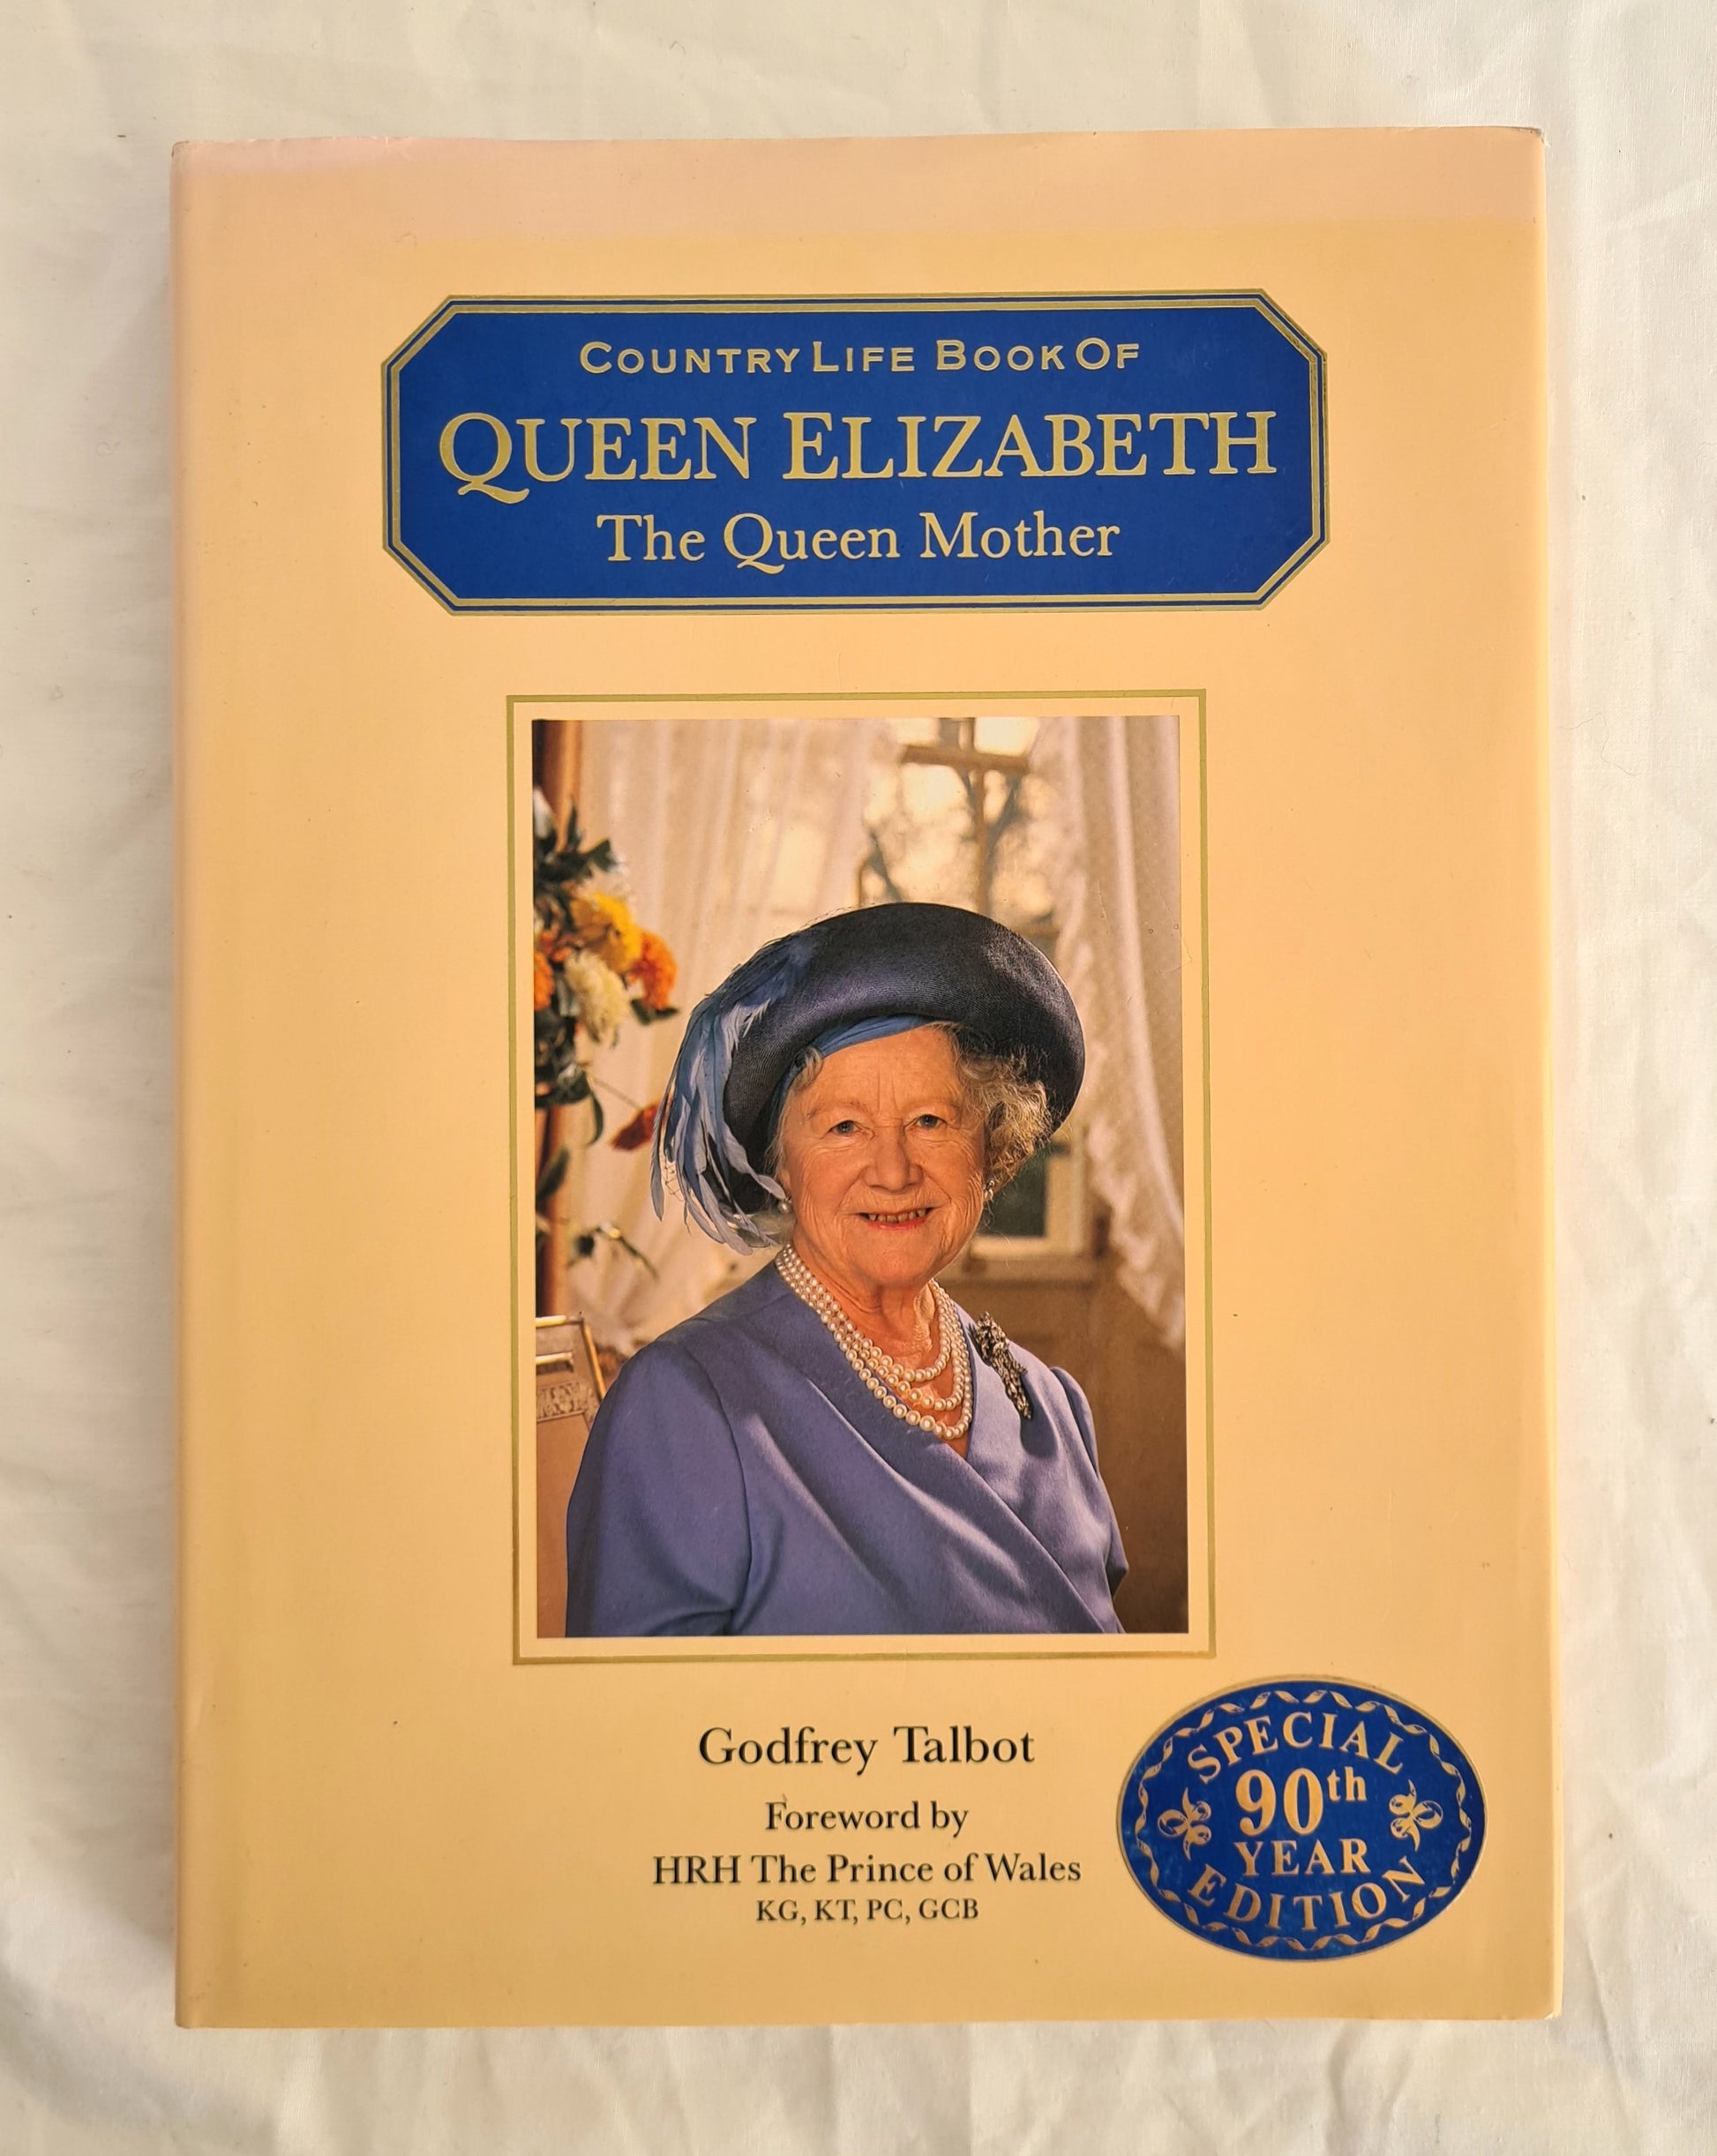 Country Life Book of Queen Elizabeth  The Queen Mother  by Godfrey Talbot